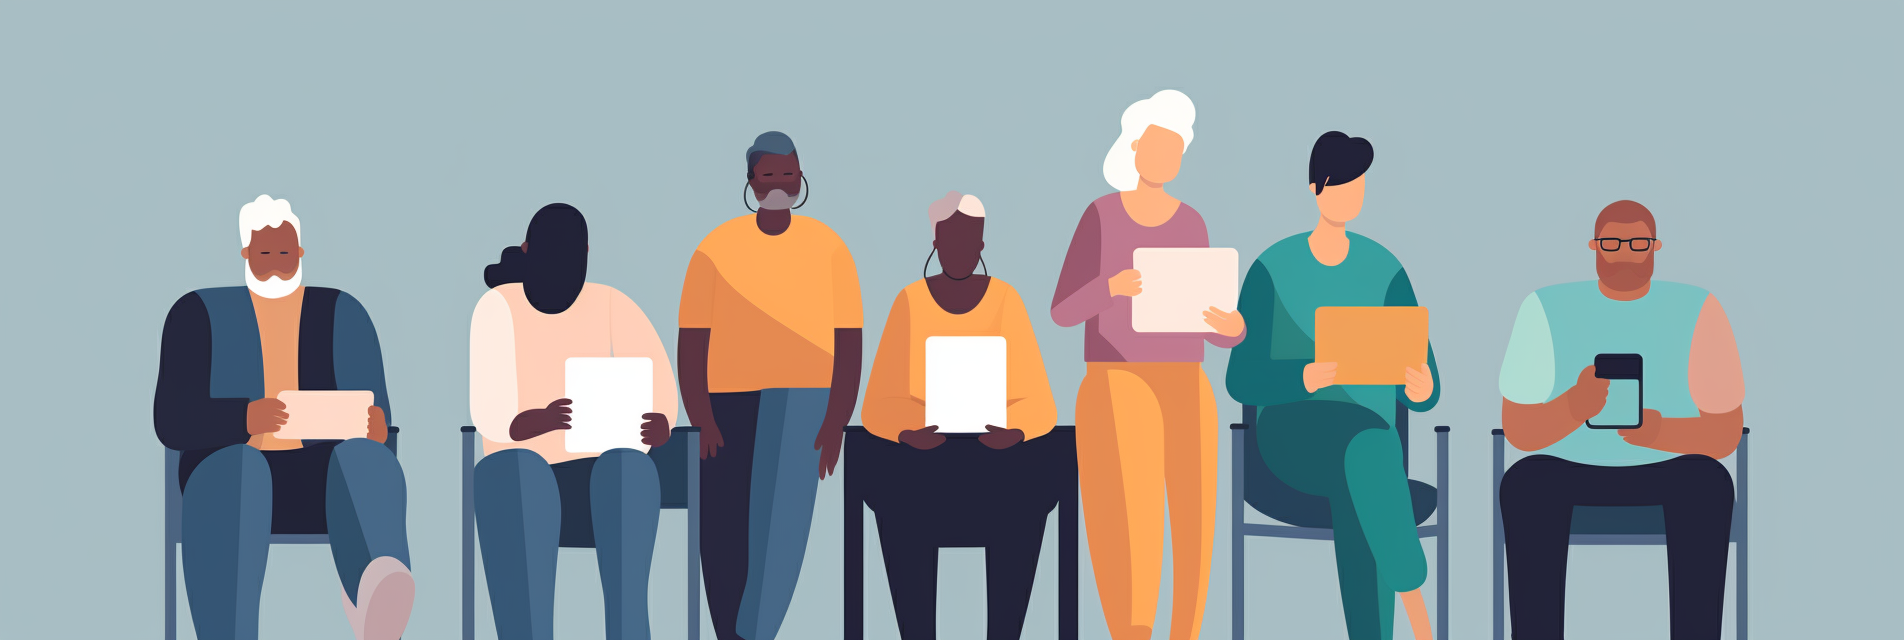 Optimizing your elder care website for diversity